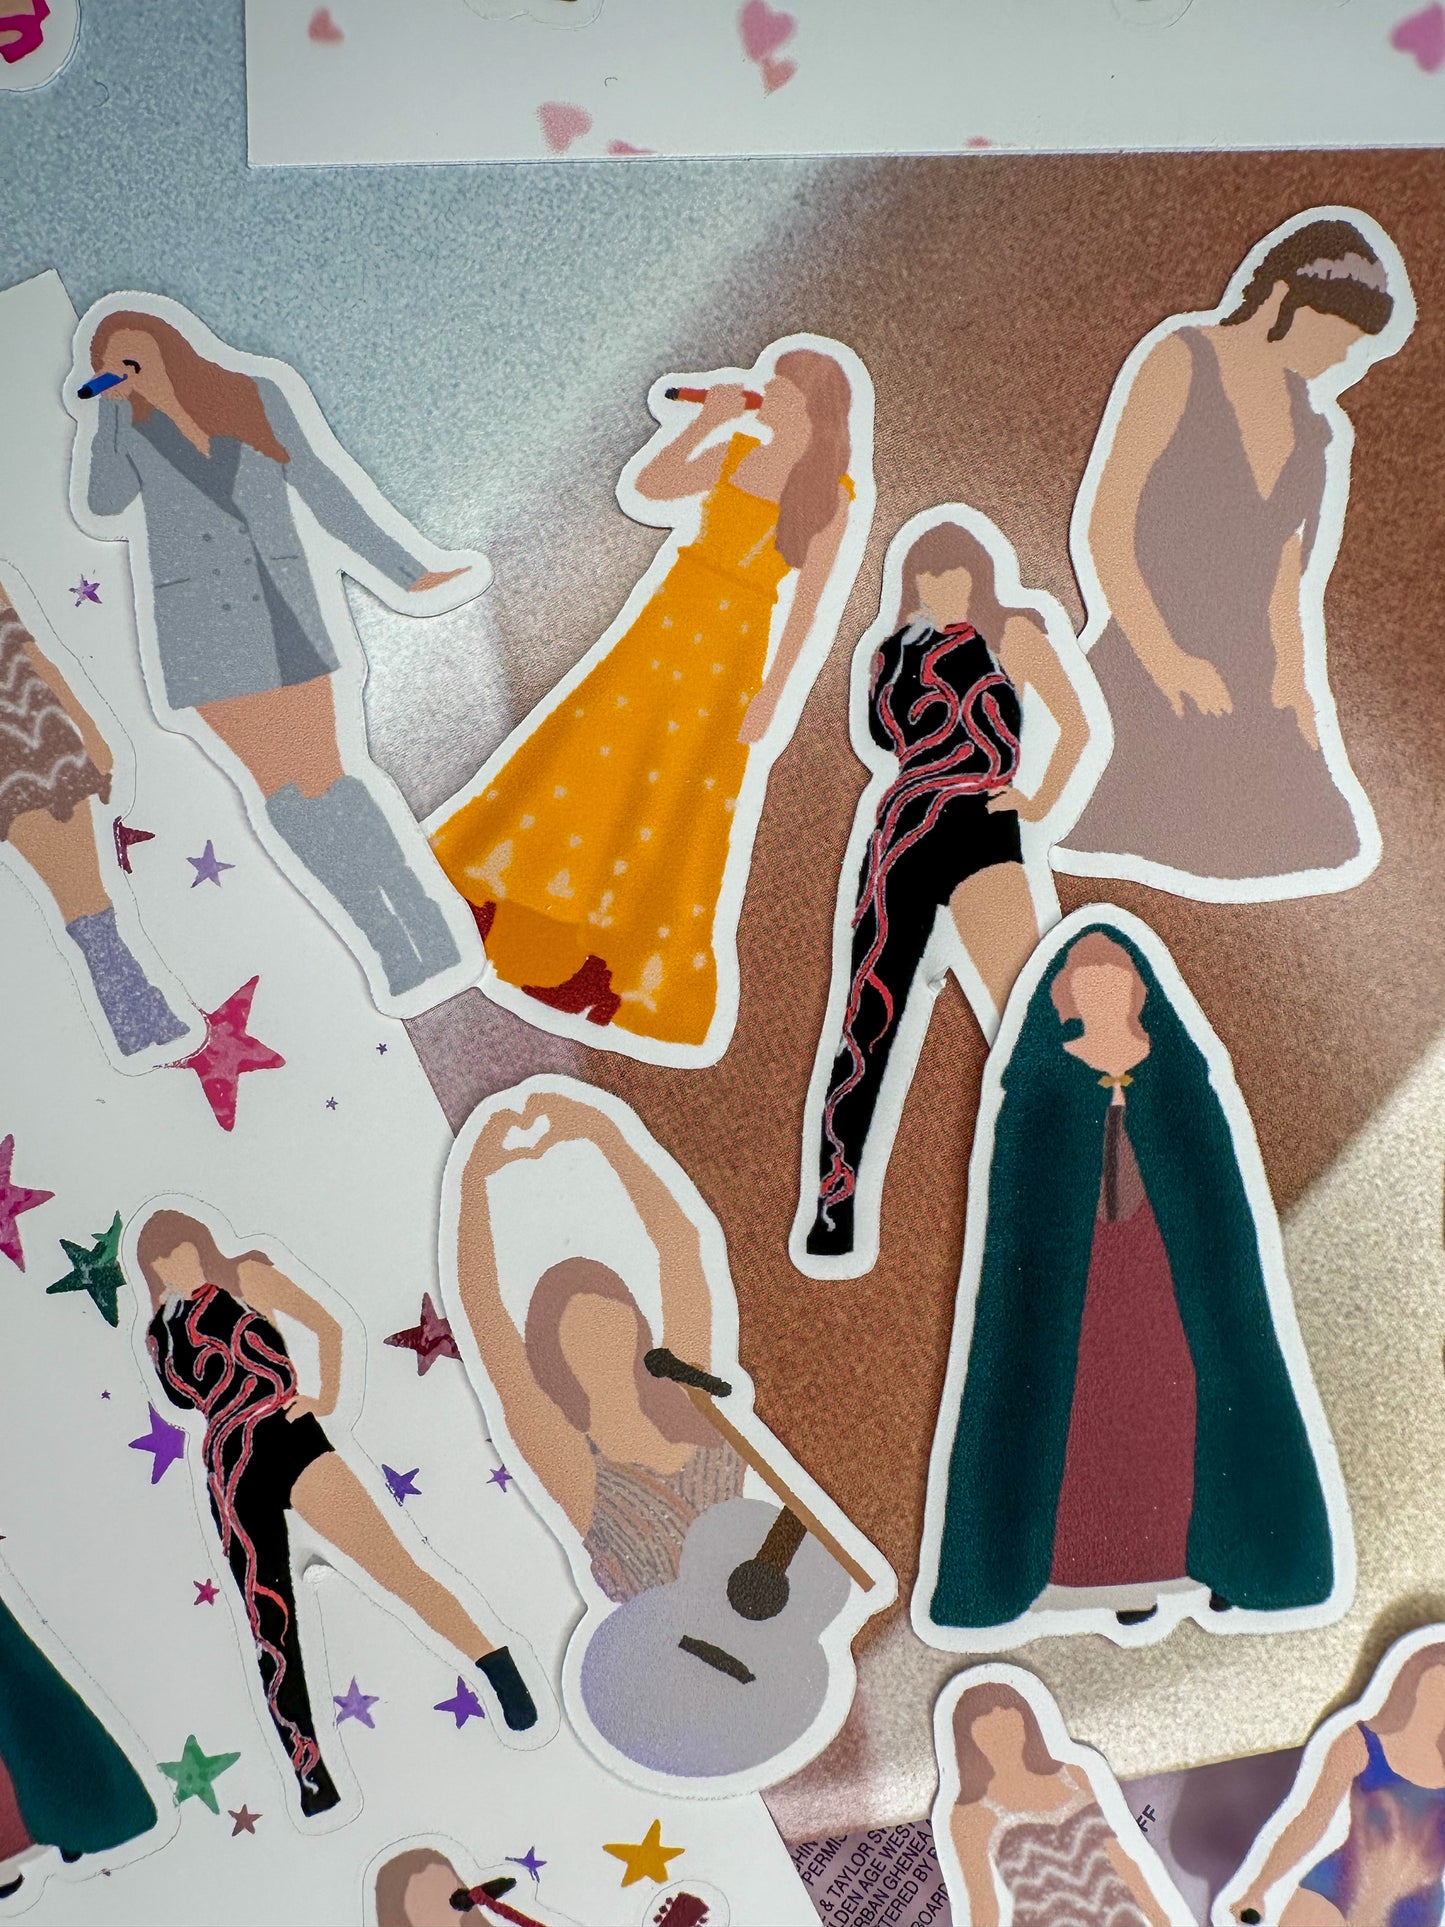 Eras Tour Outfit Stickers | Taylor Swift Swiftie Midnights Grammys Kiss cut Sticker Sheet and die cut sticker options matte finish